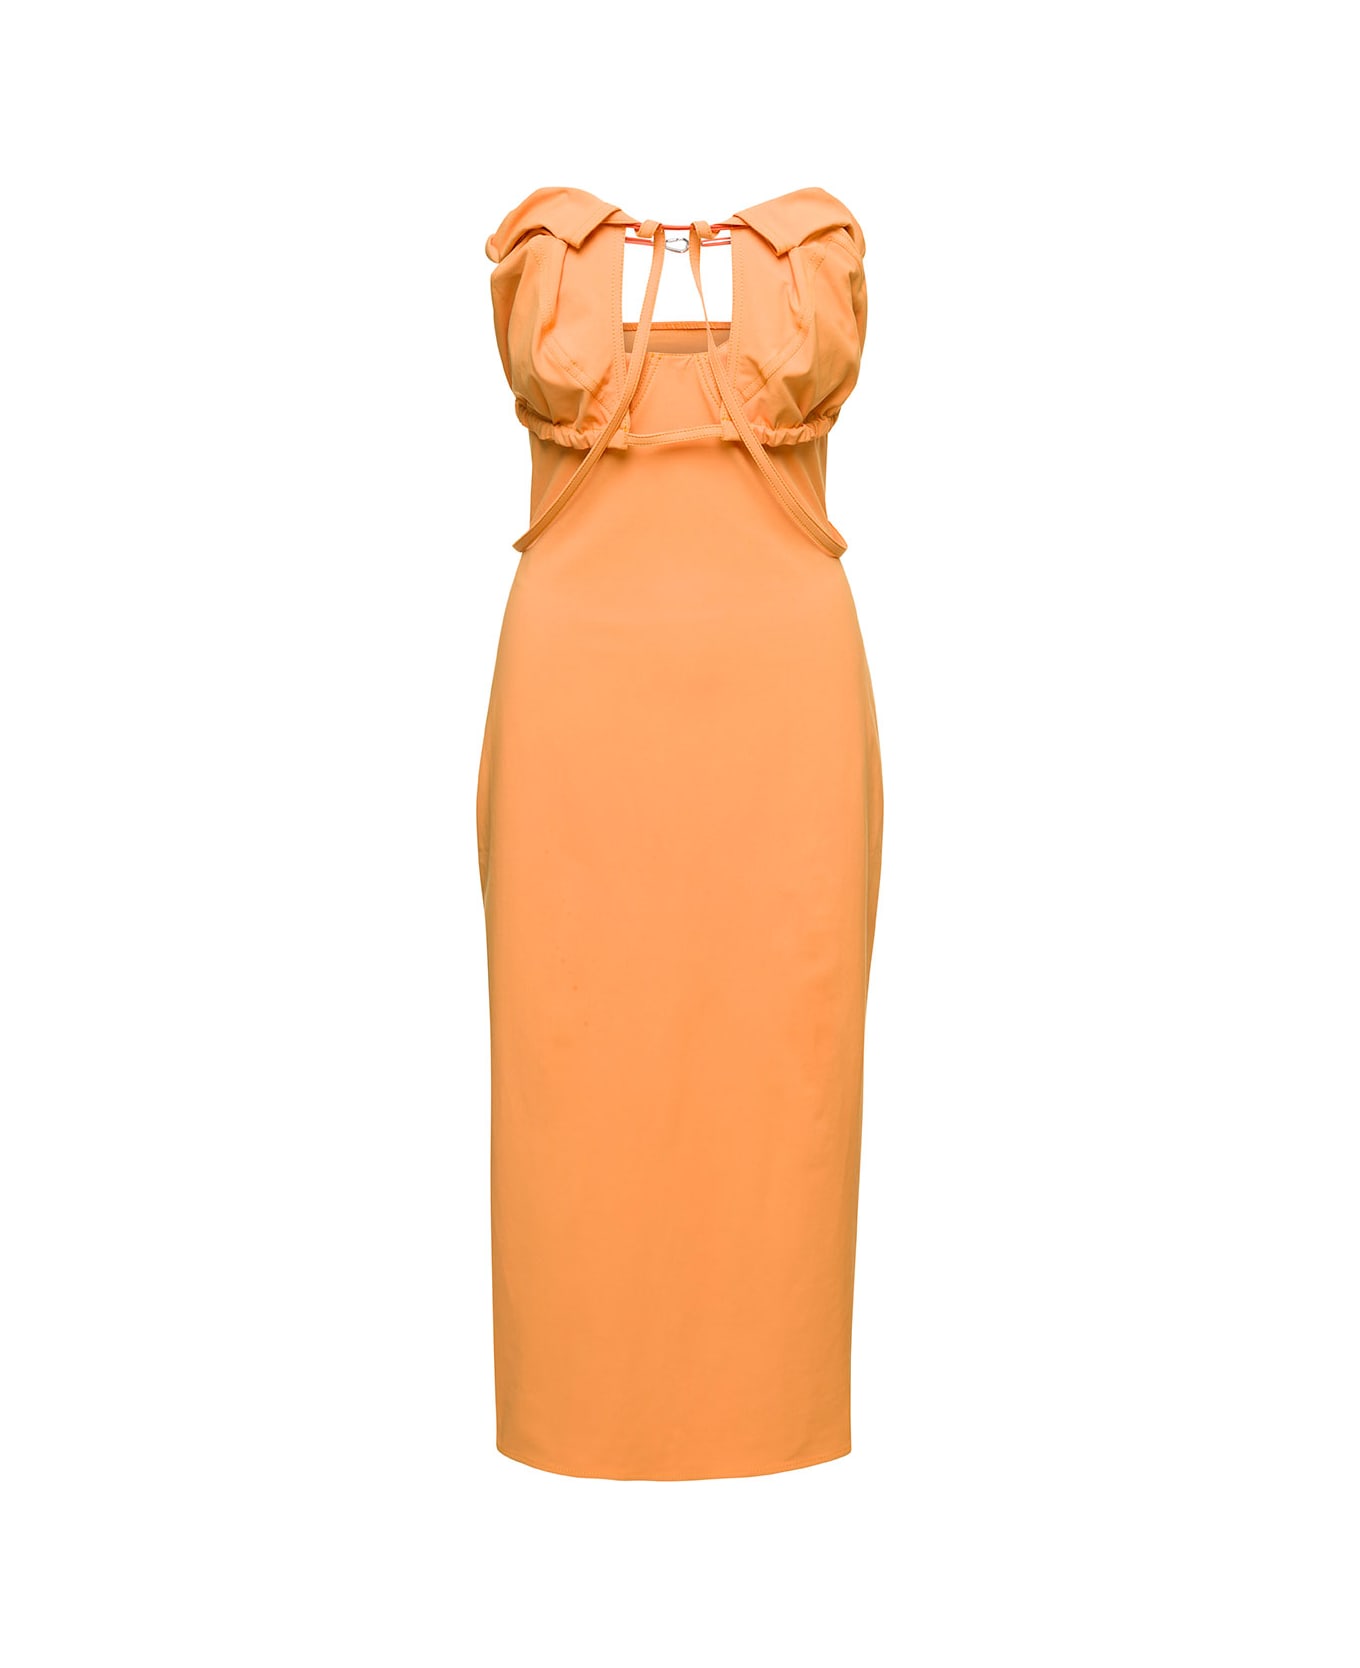 Jacquemus Orange Midi Dress La Robe Bikini In Cotton Blend Woman - Orange